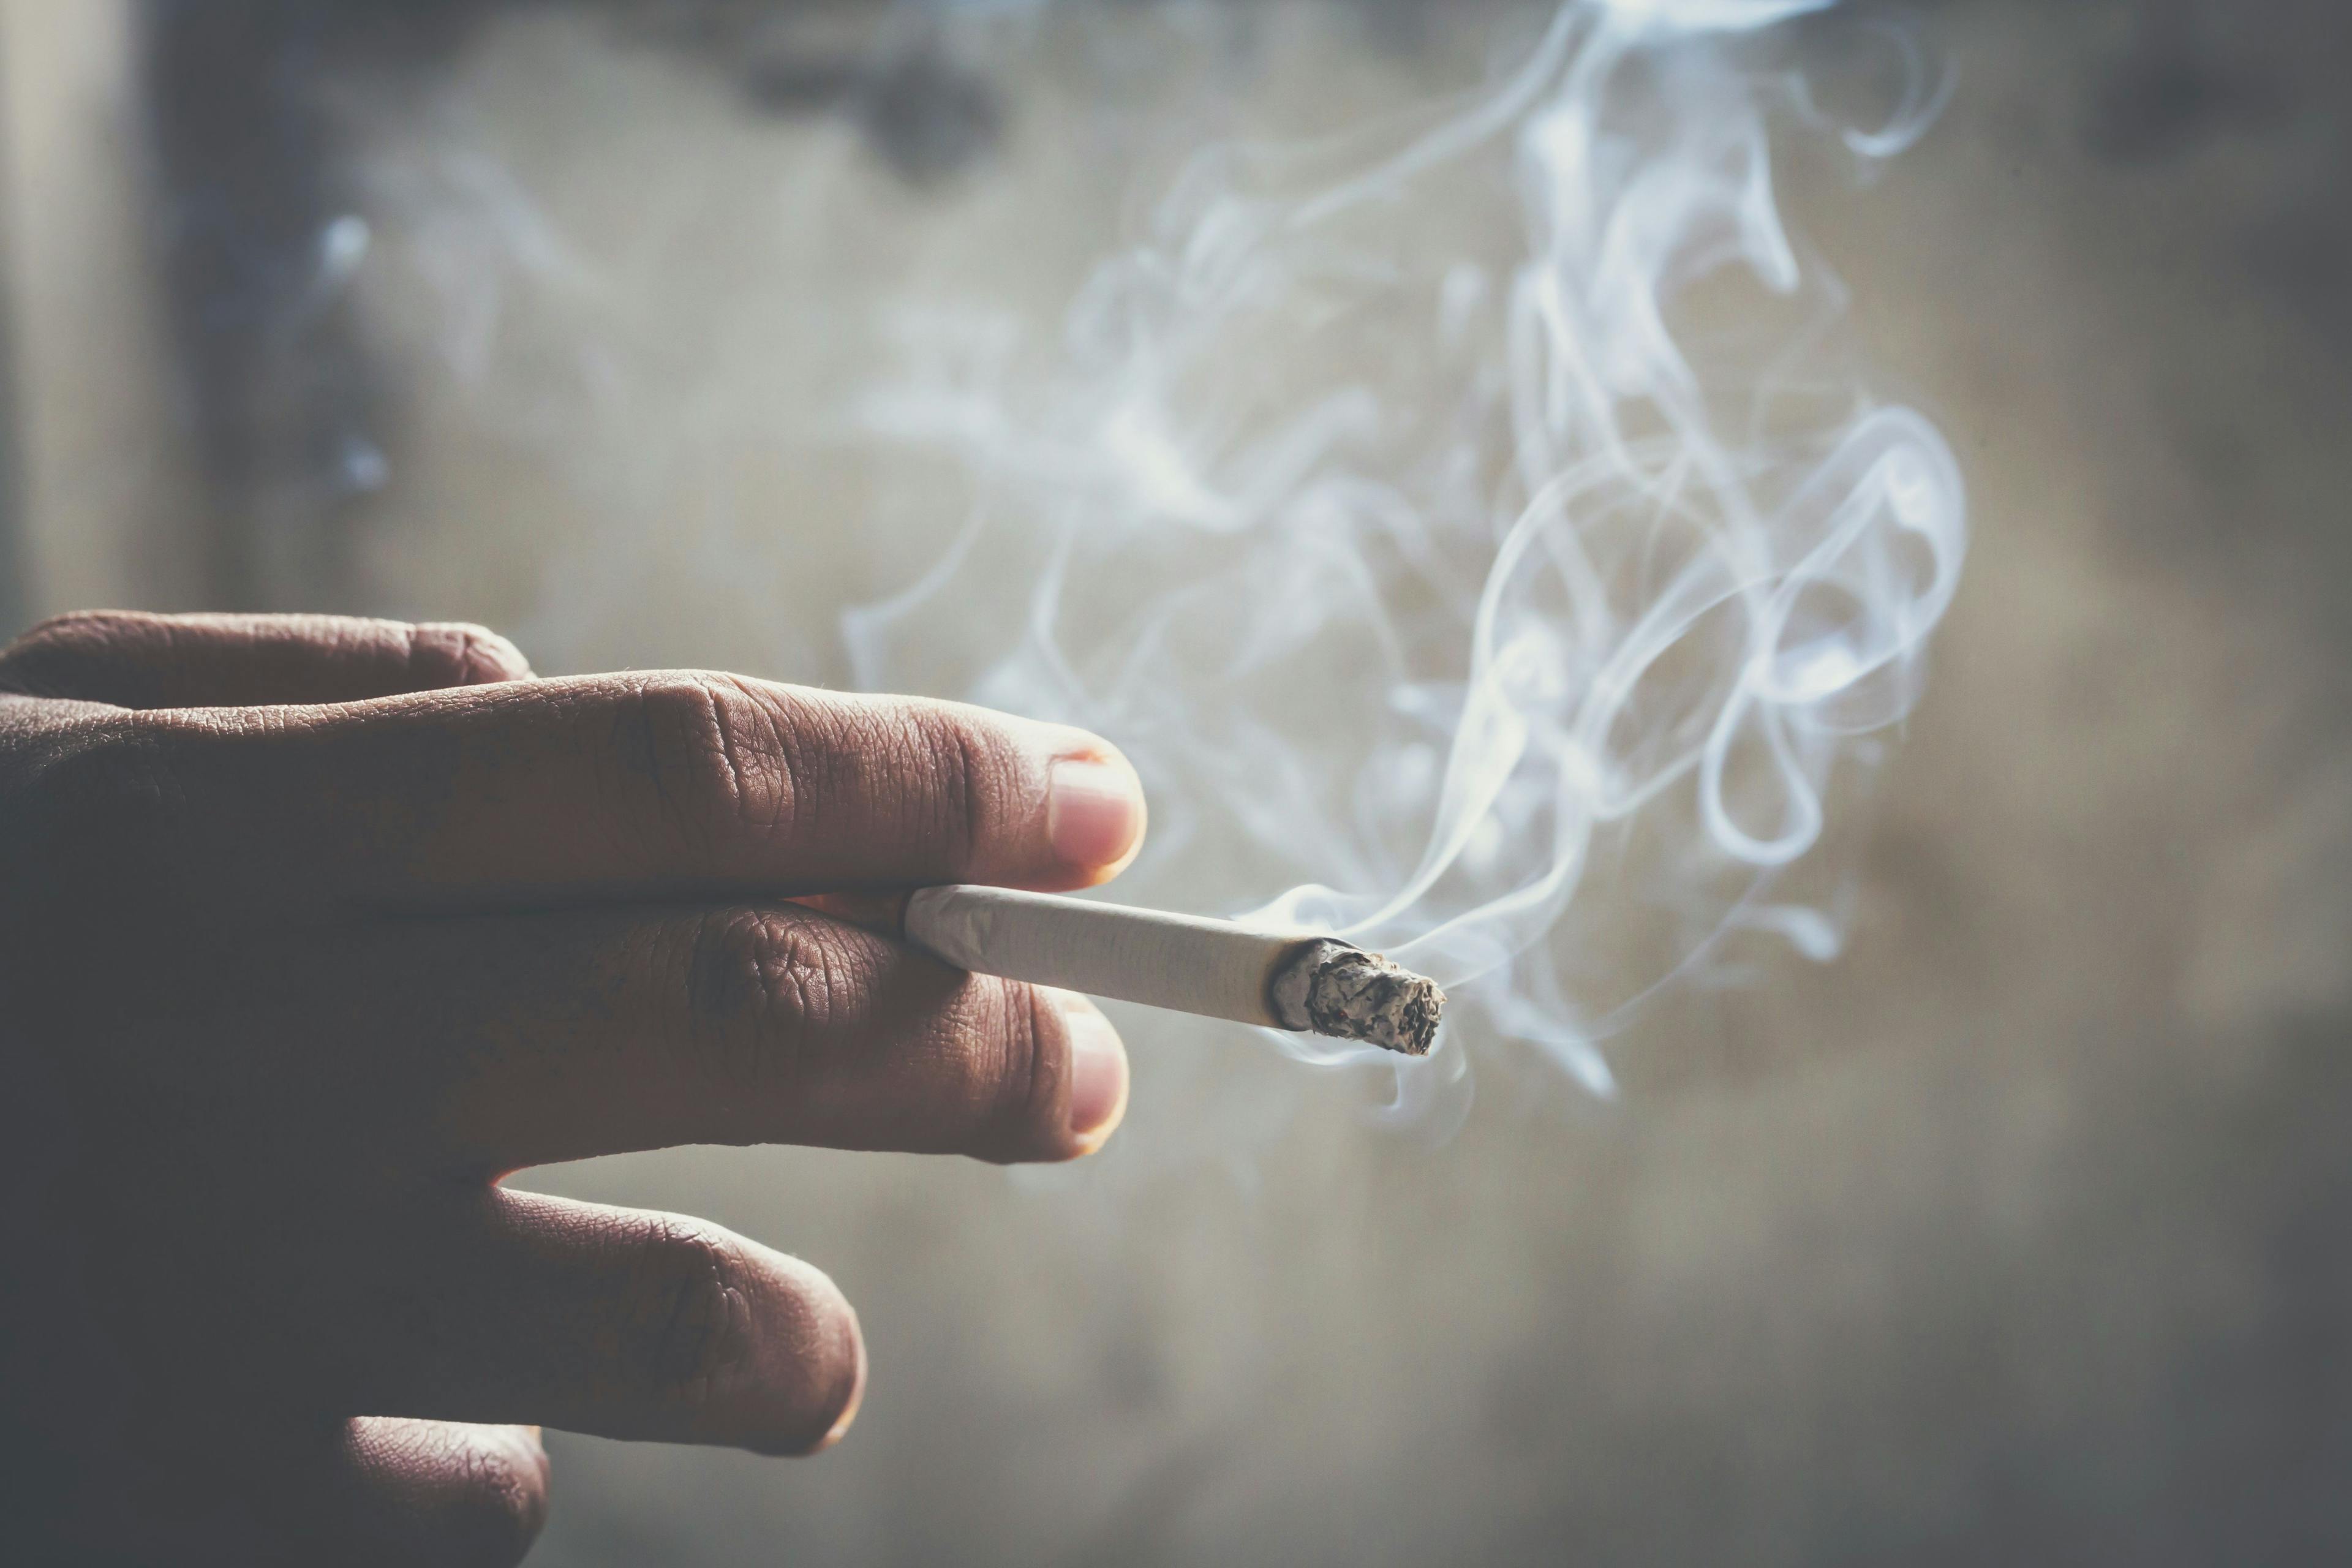 man holding smoking a cigarette in hand. Cigarette smoke spread. dark background - Image credit: Methaphum | stock.adobe.com